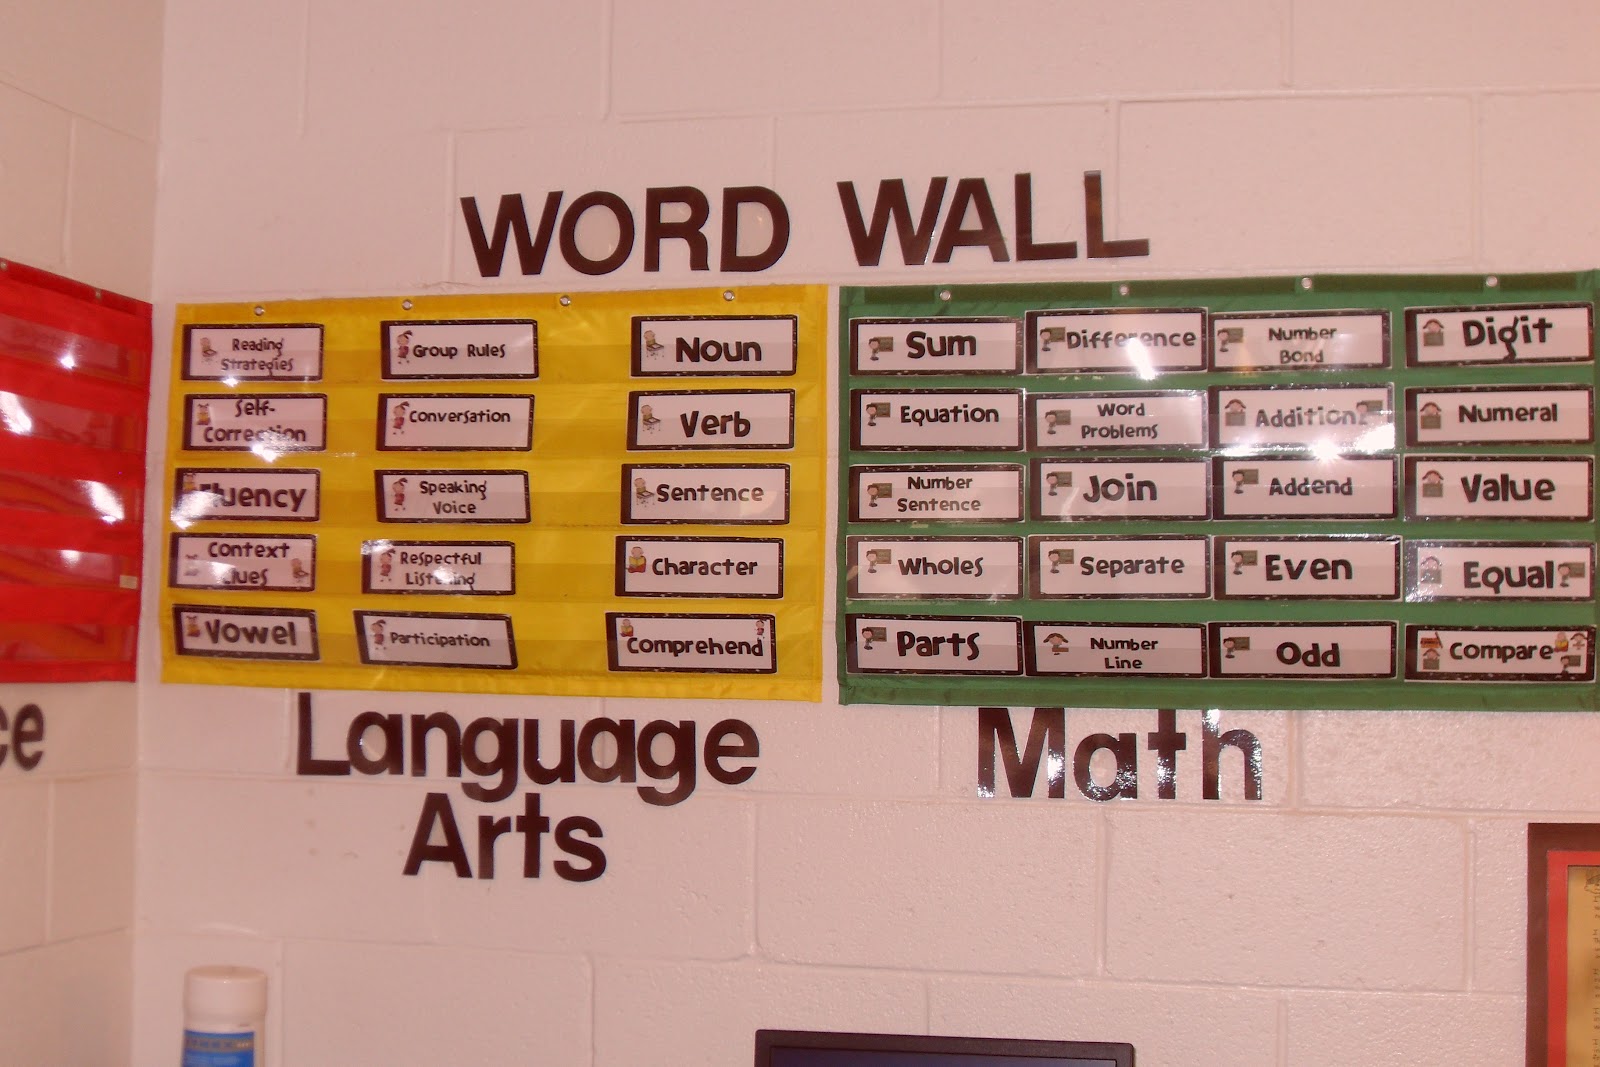 Match wordwall. Word Wall. Classrooms Wordwall. Wordwall платформа. Time Wordwall.